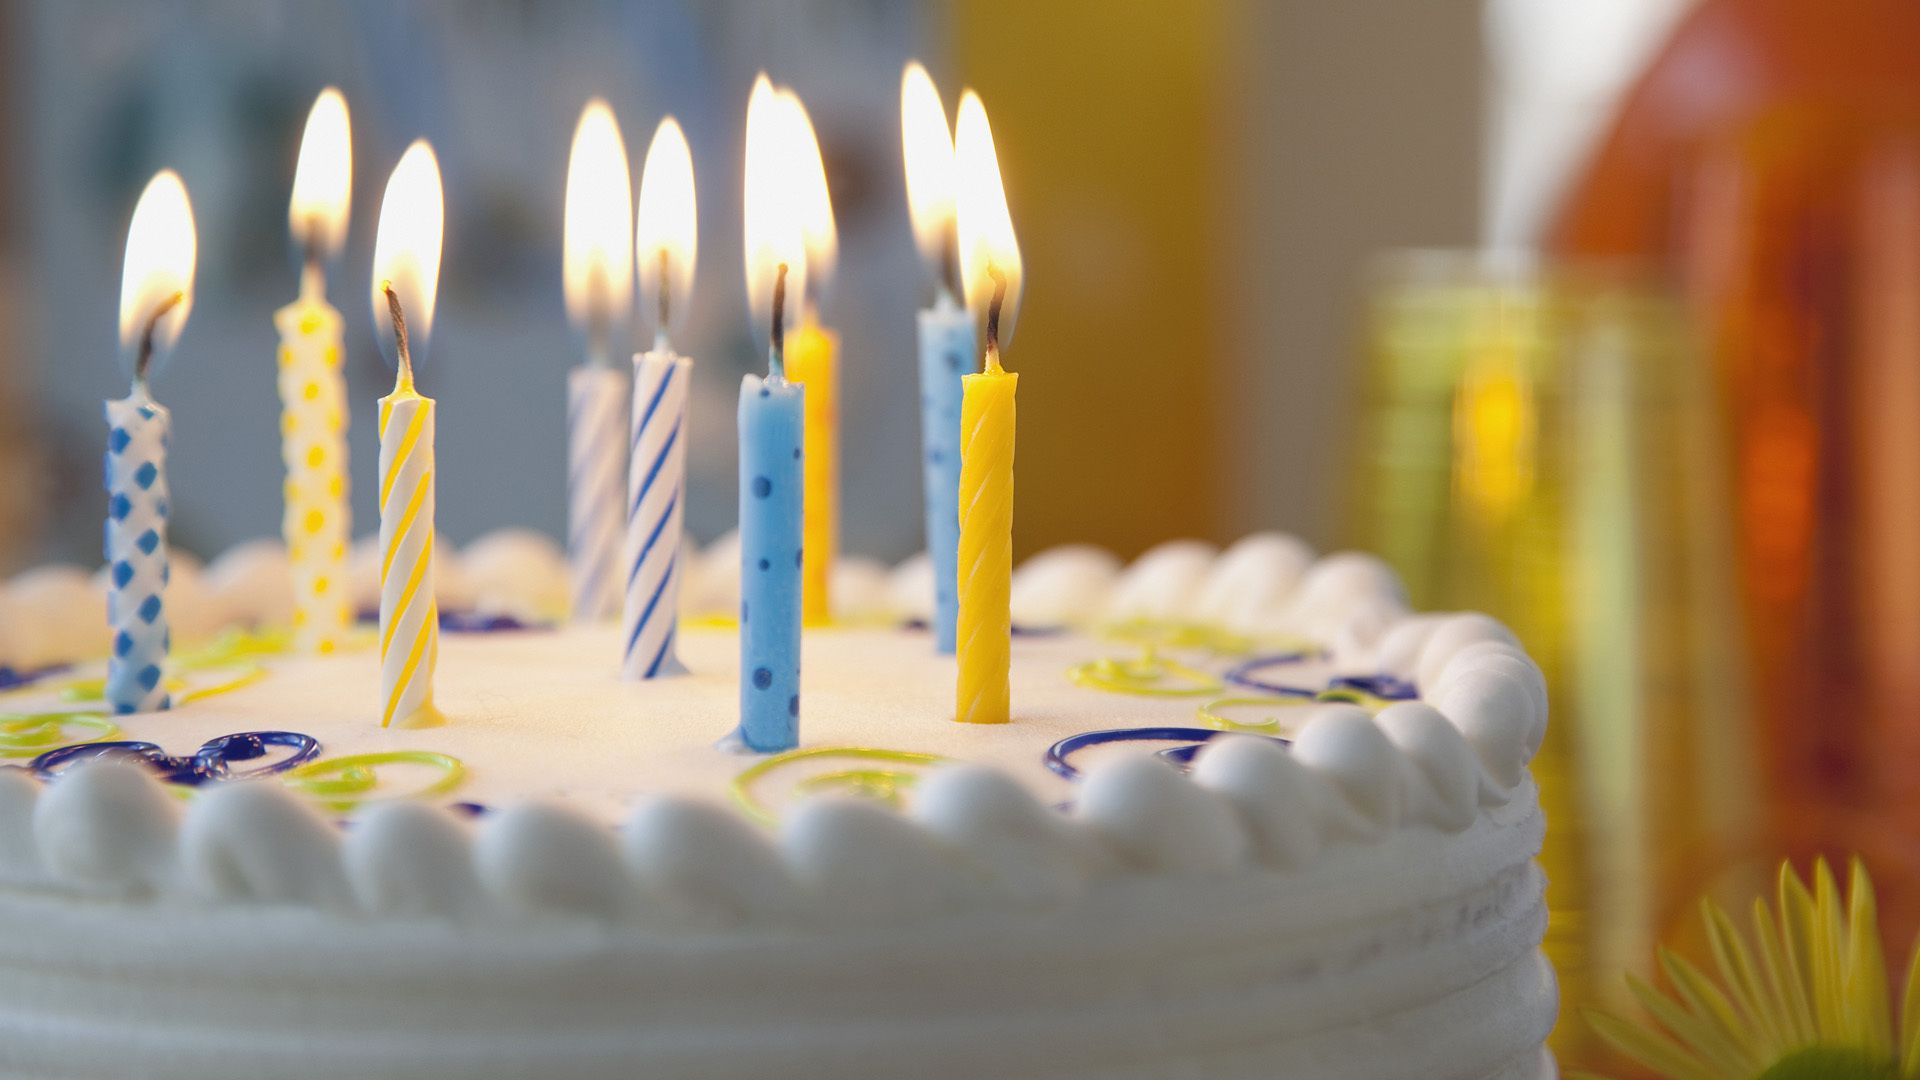 gambar kue ulang tahun dan lilin